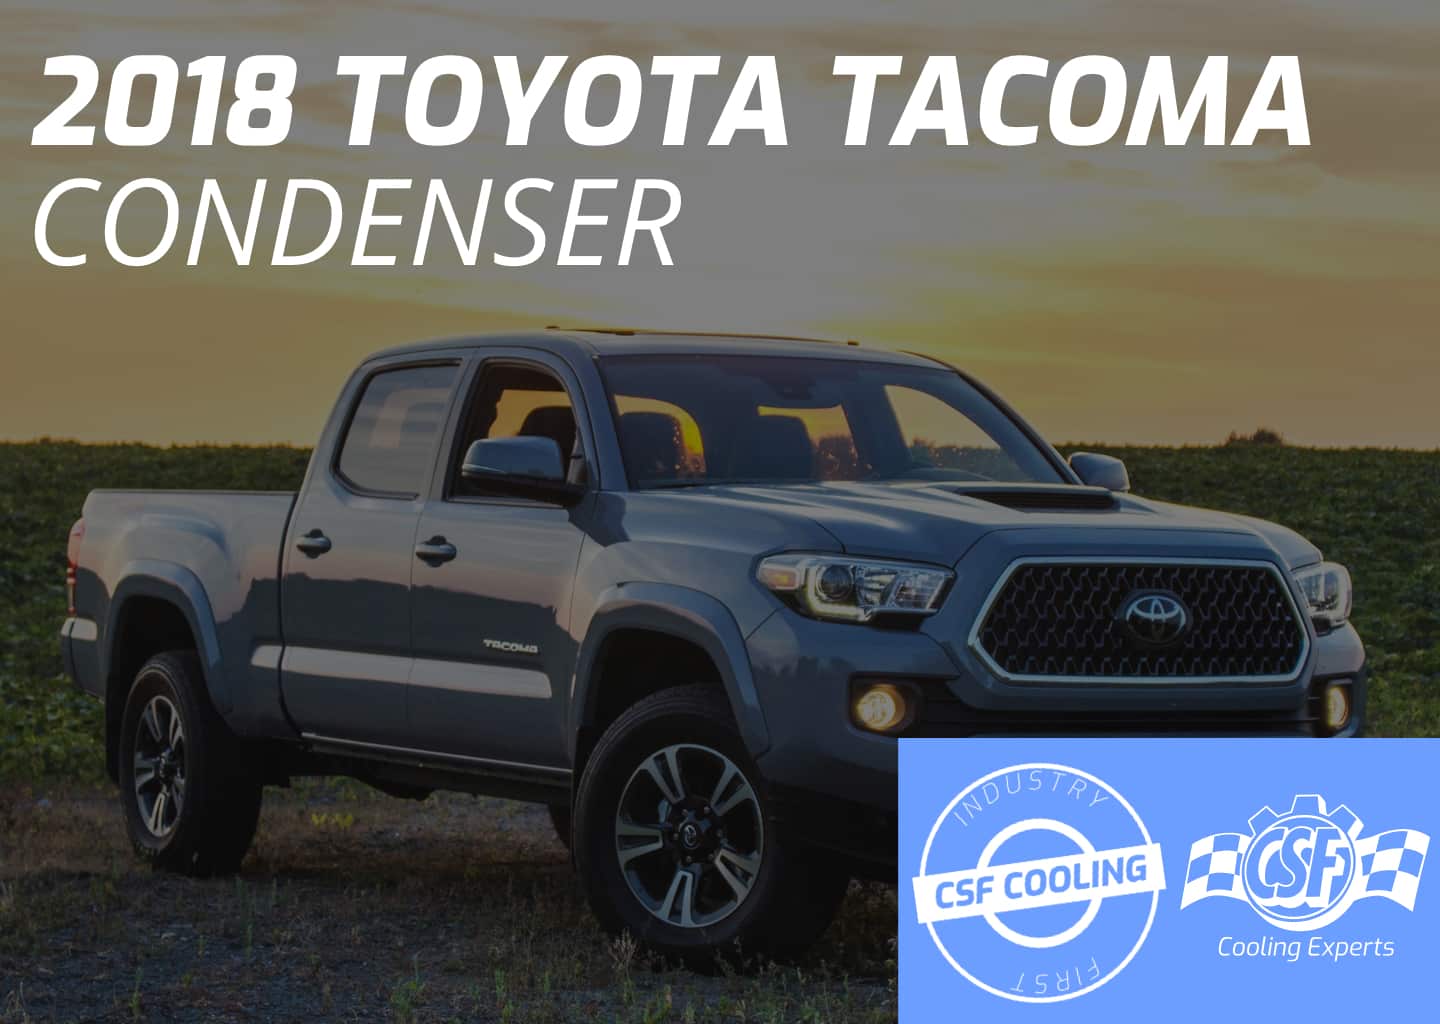 2018 Toyota Tacoma Condenser